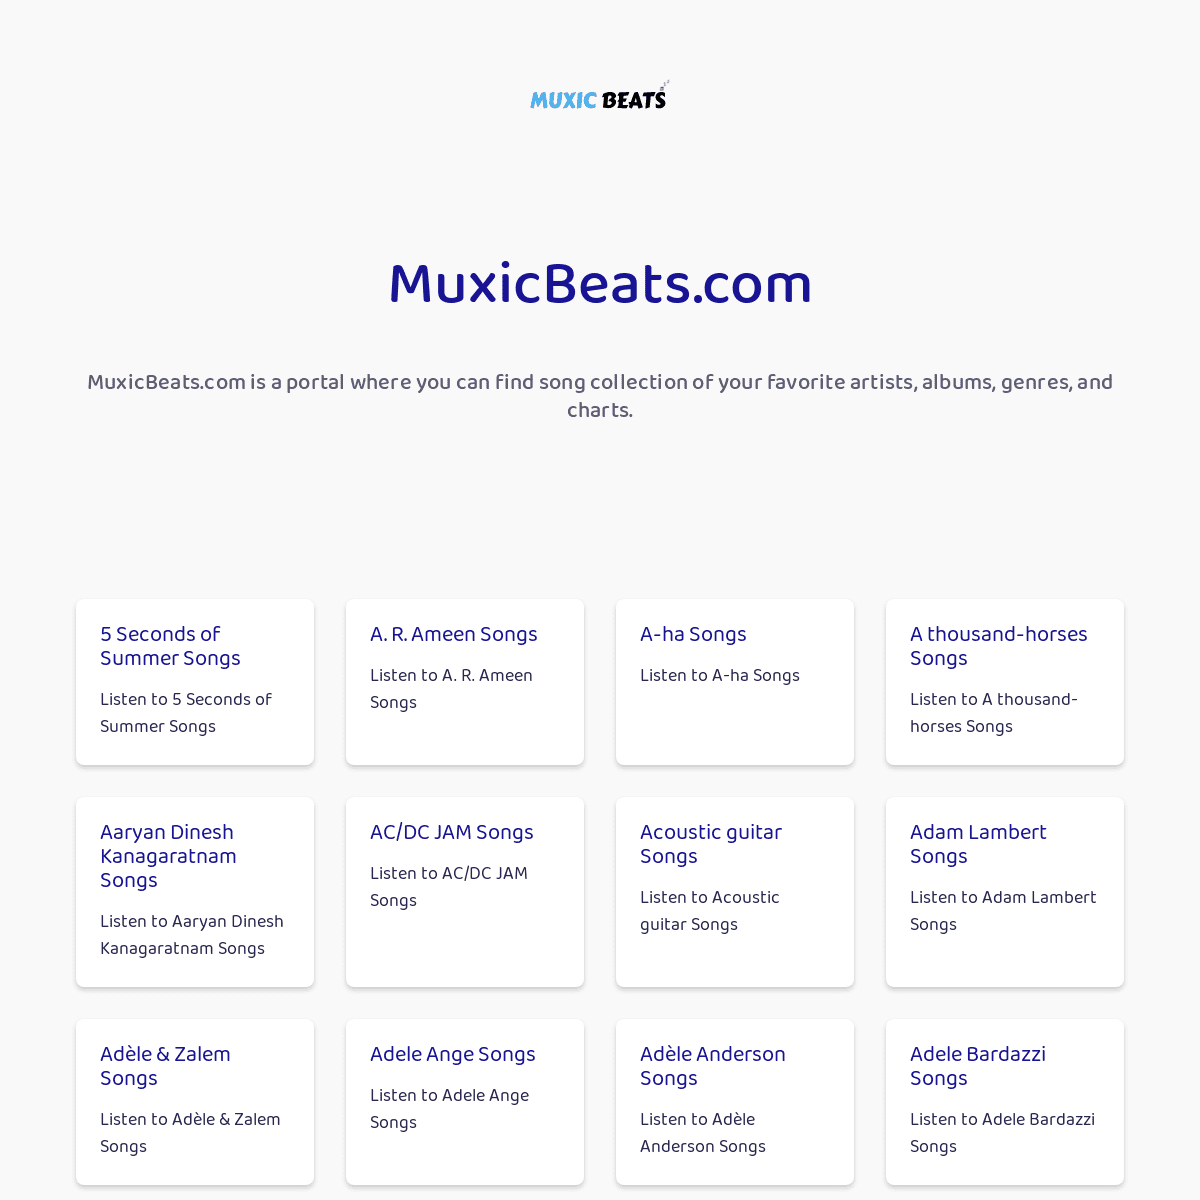 A complete backup of https://muxicbeats.com